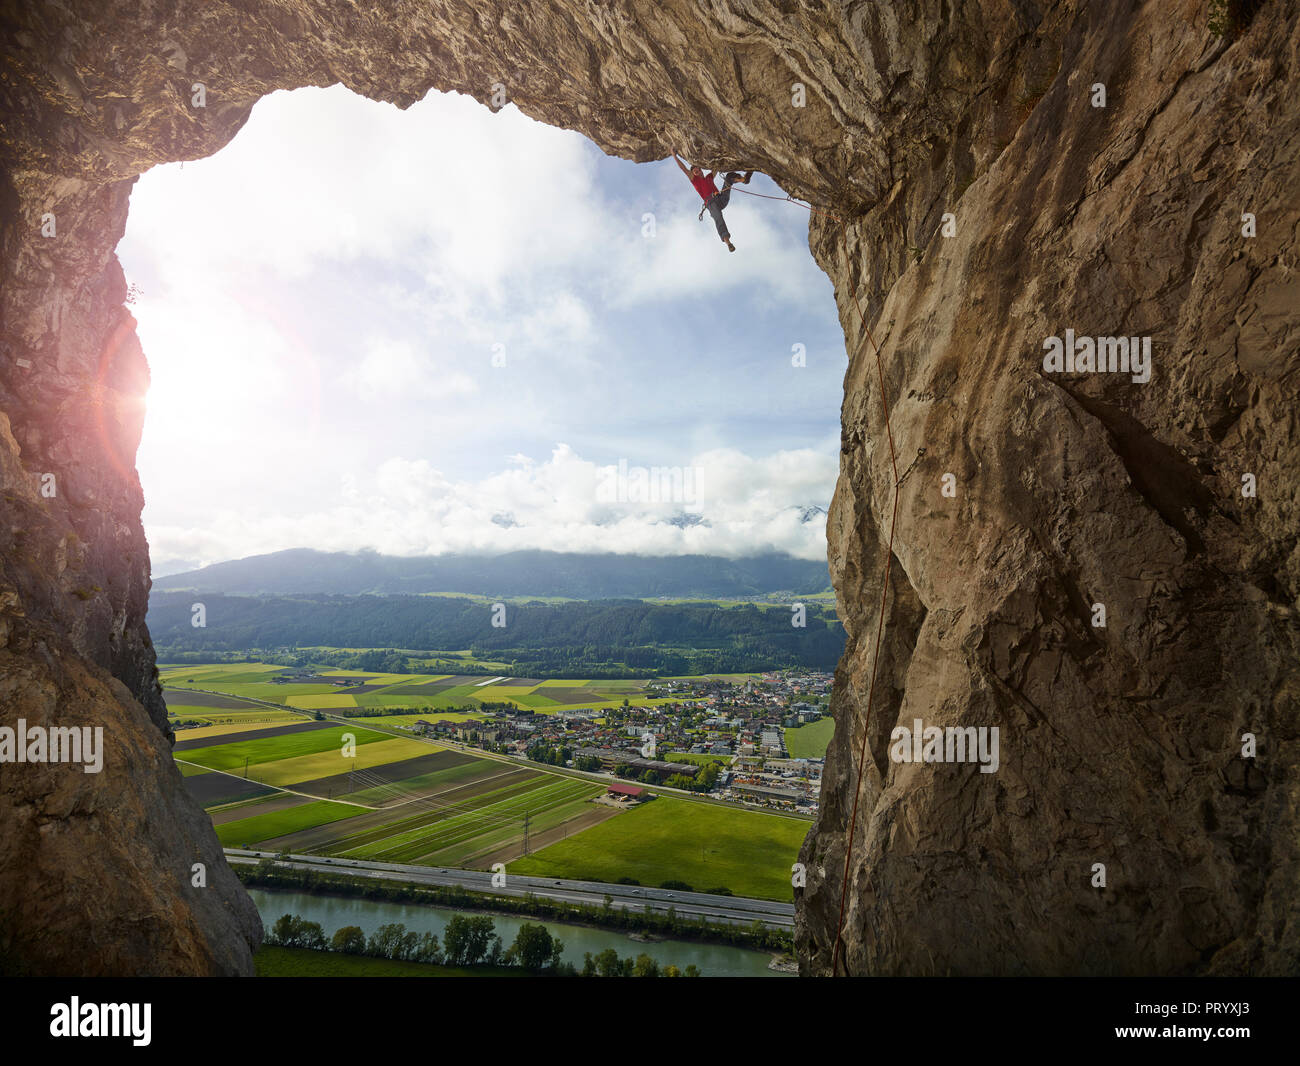 Austria, Innsbruck, Martinswand, man climbing in grotto Stock Photo